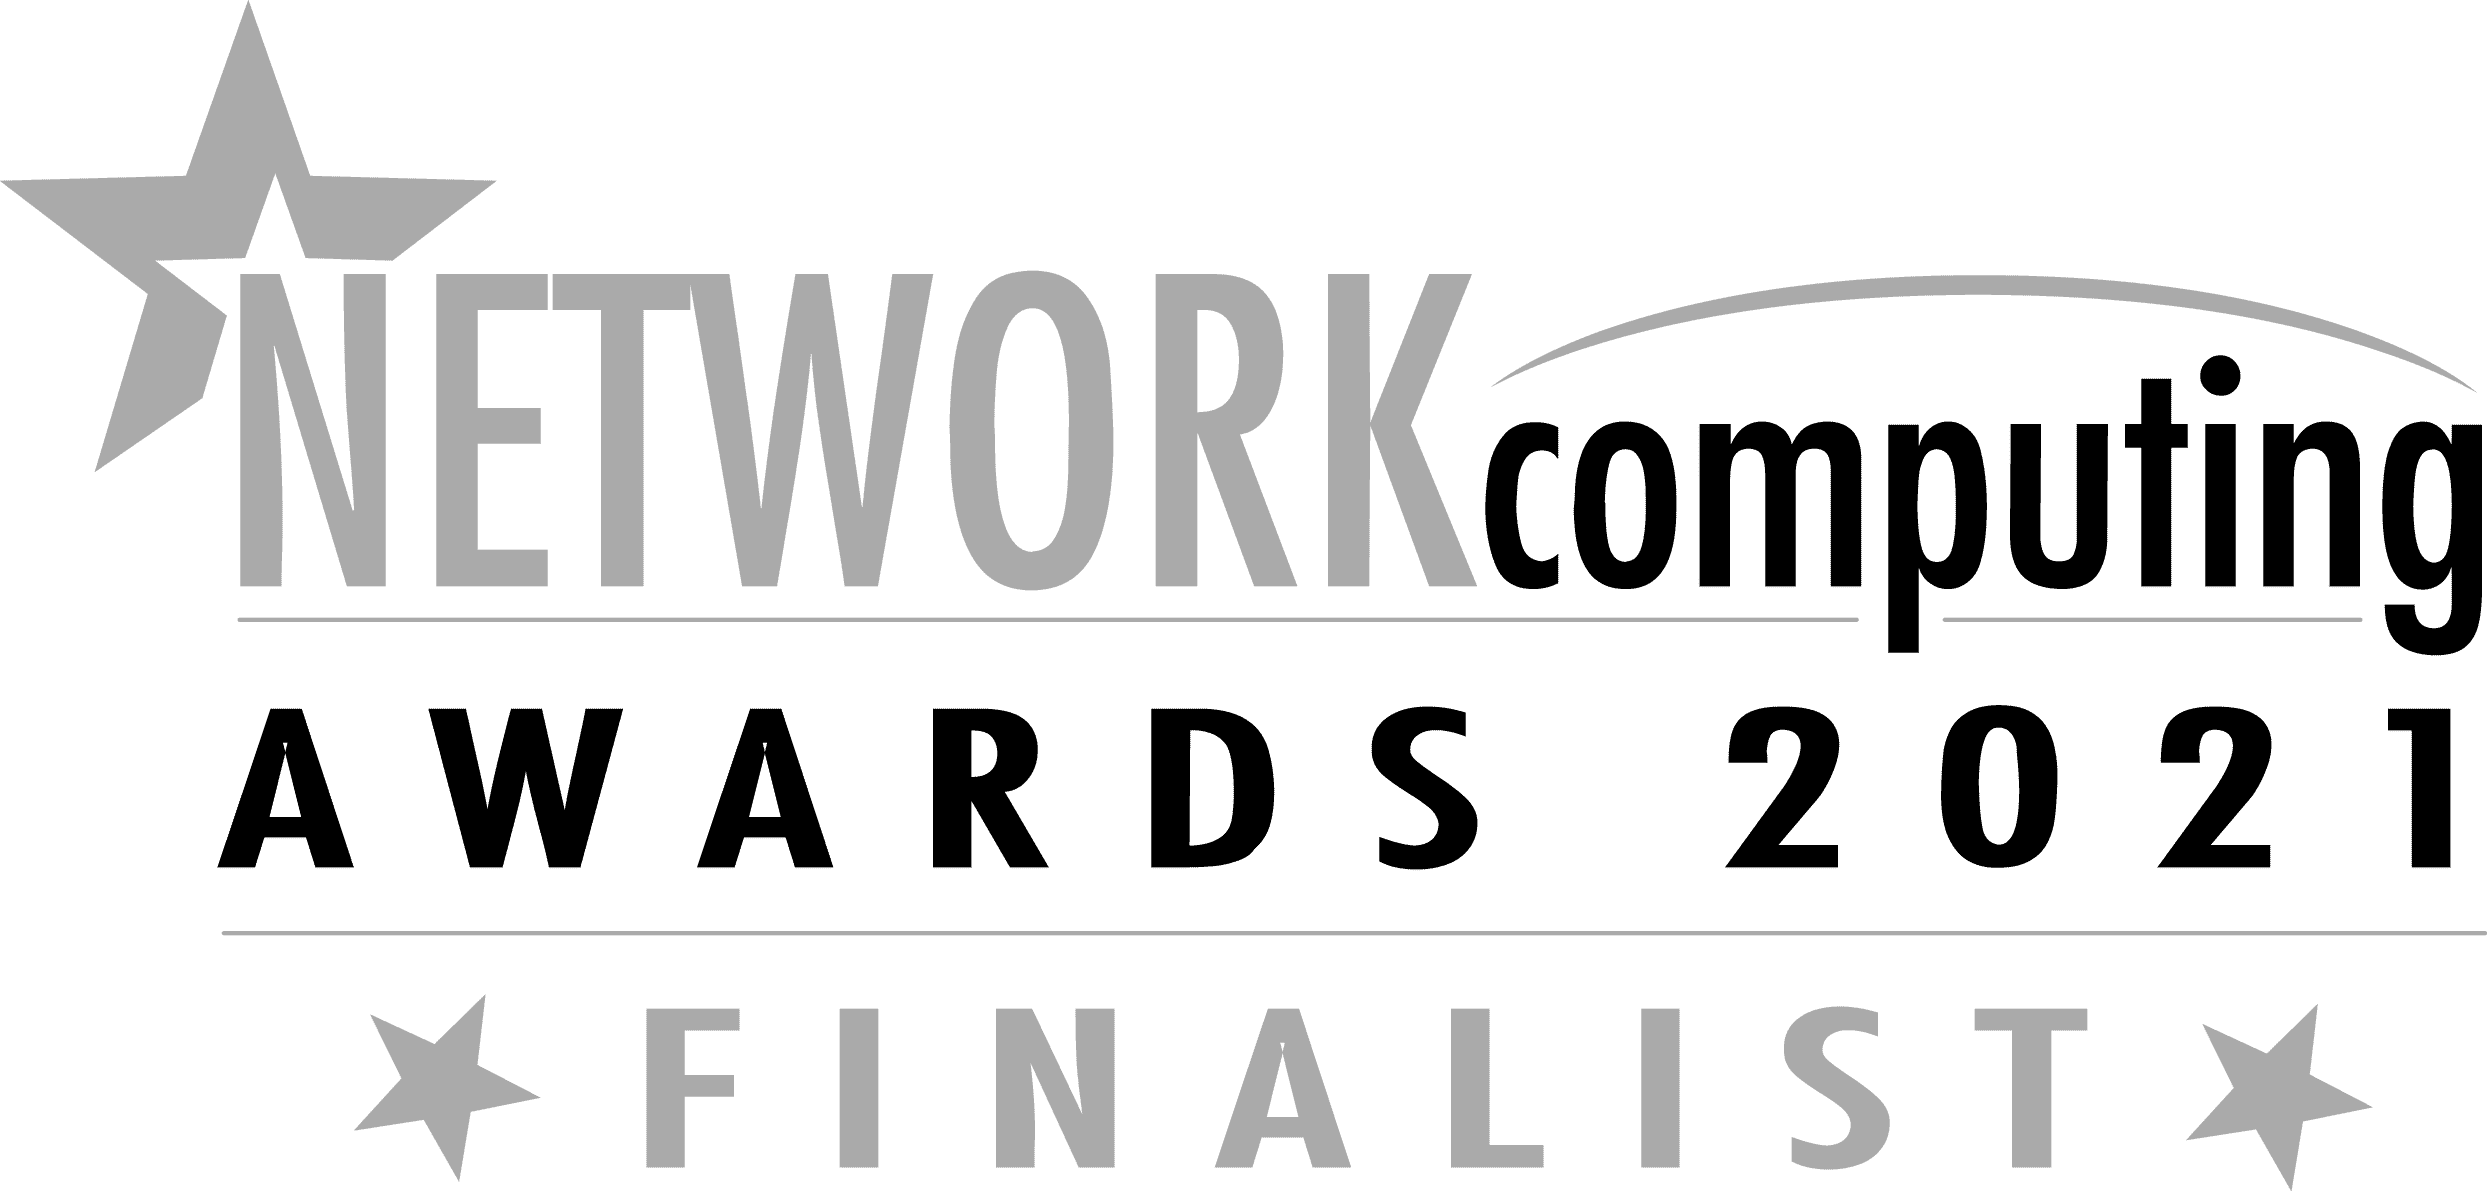 Network Computing 2021 Finalist